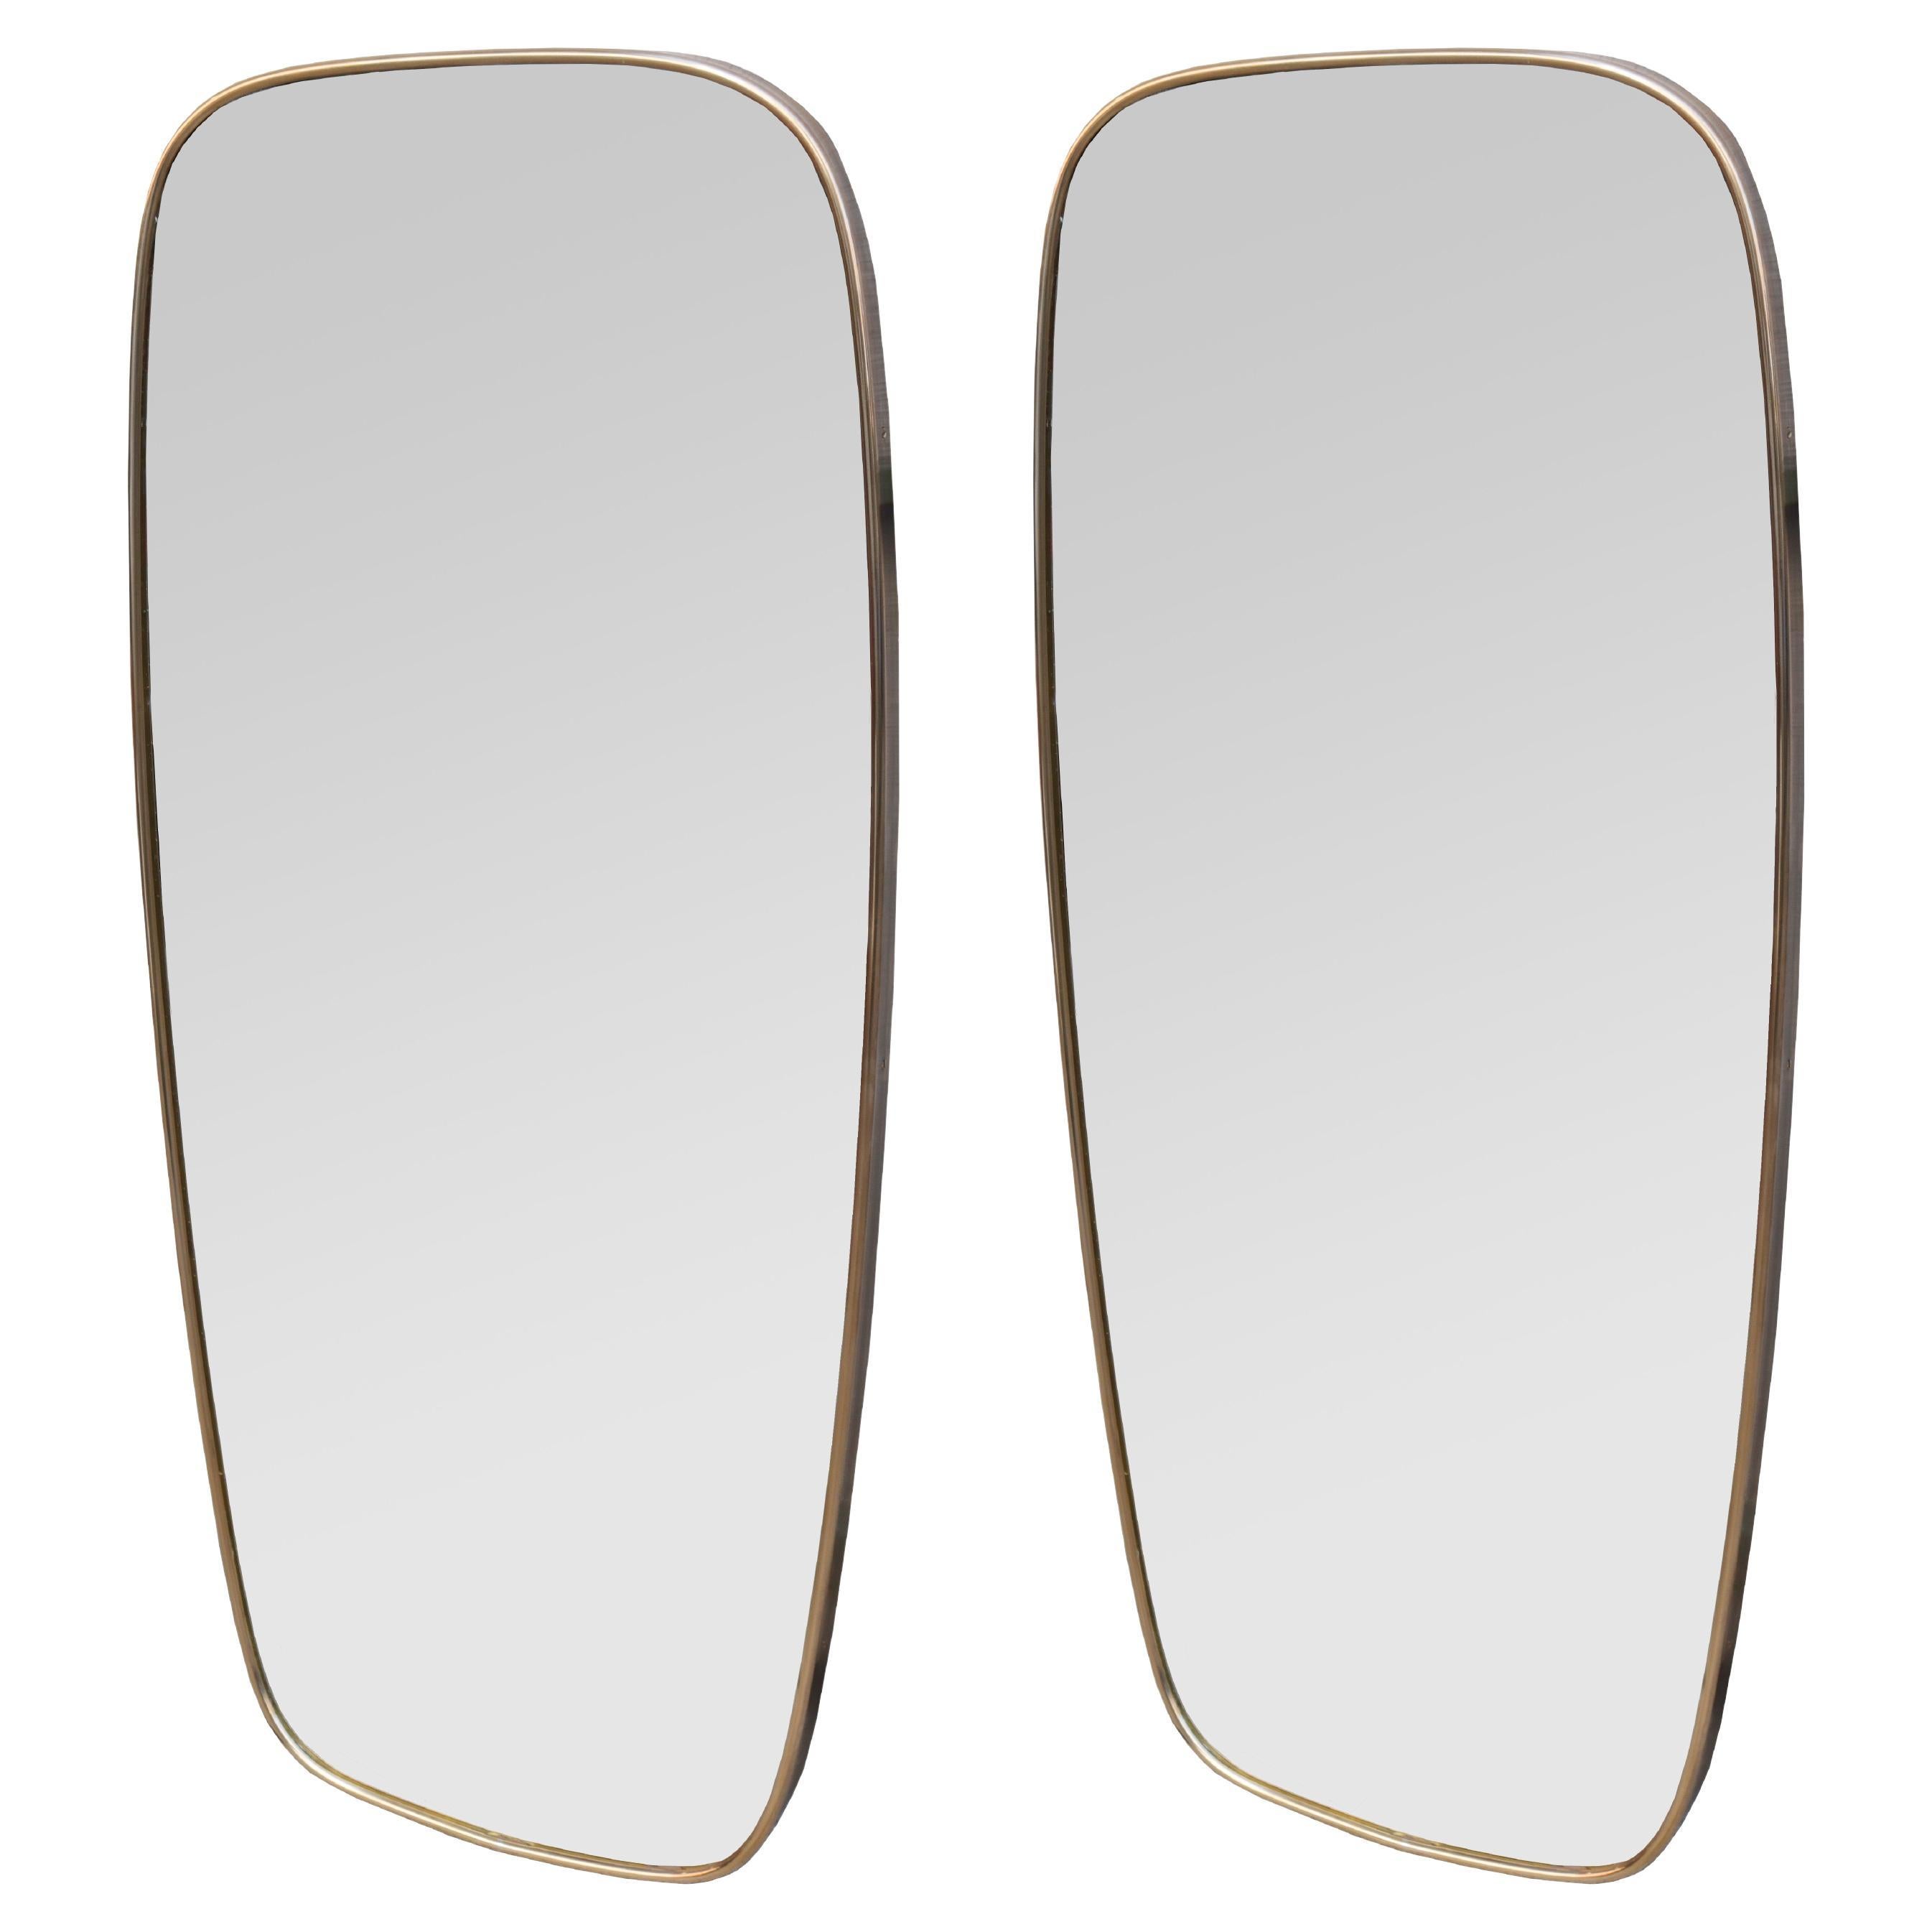 Pair of Italian Mid-Century Modern Mirrors For Sale